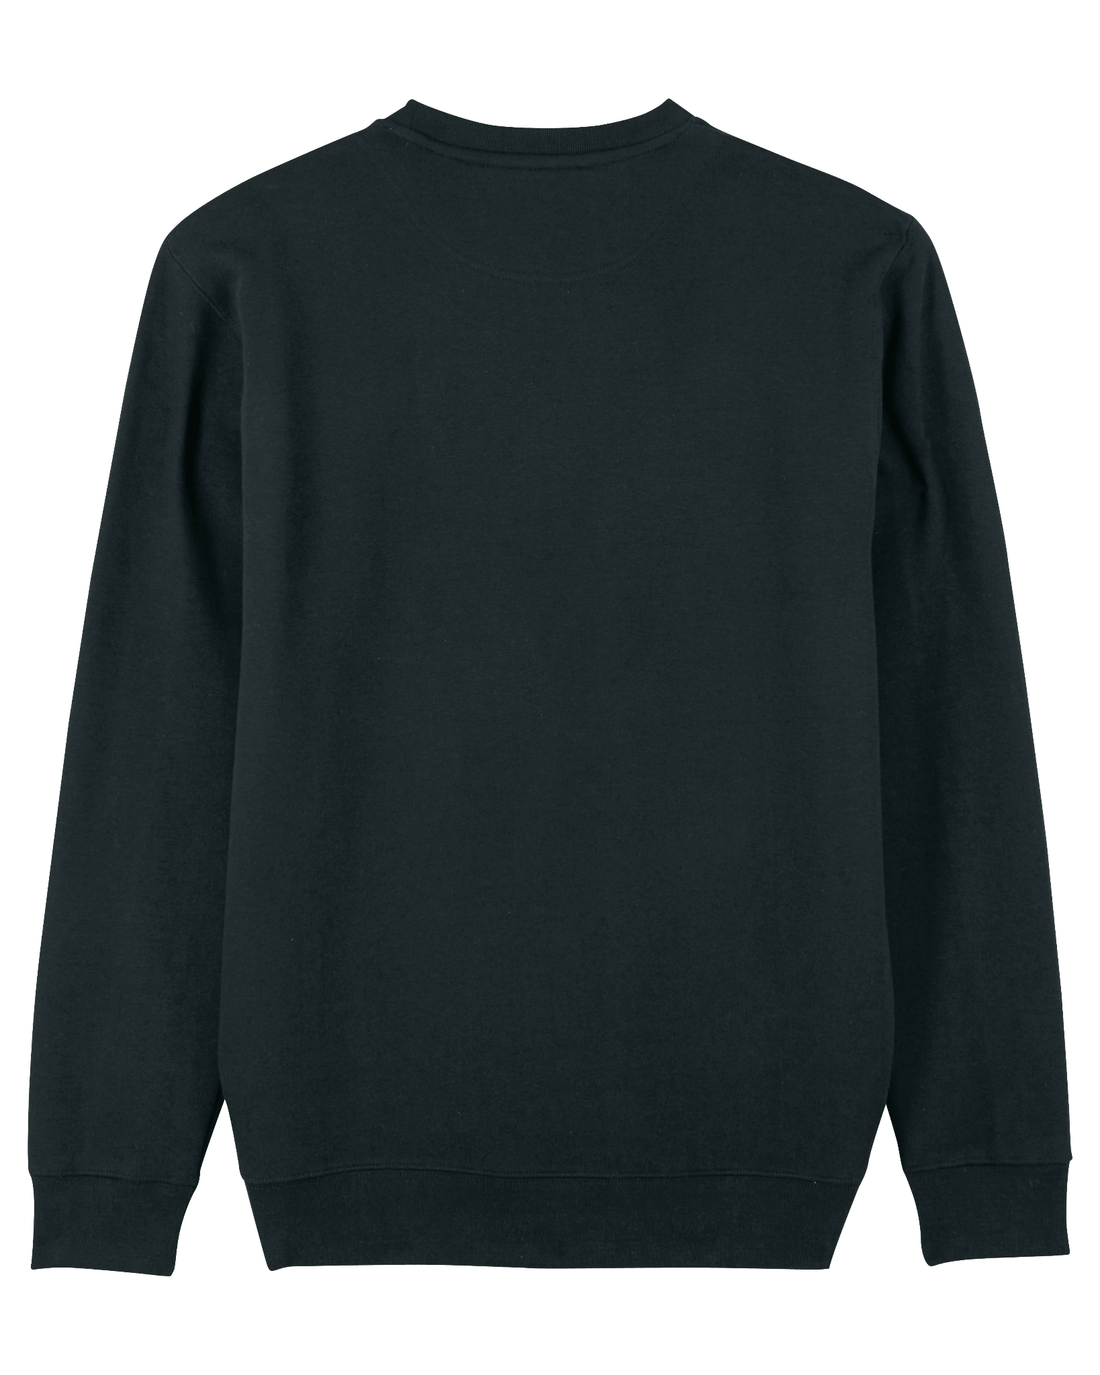 Black Skater Sweatshirt, Skater Boy Back Print